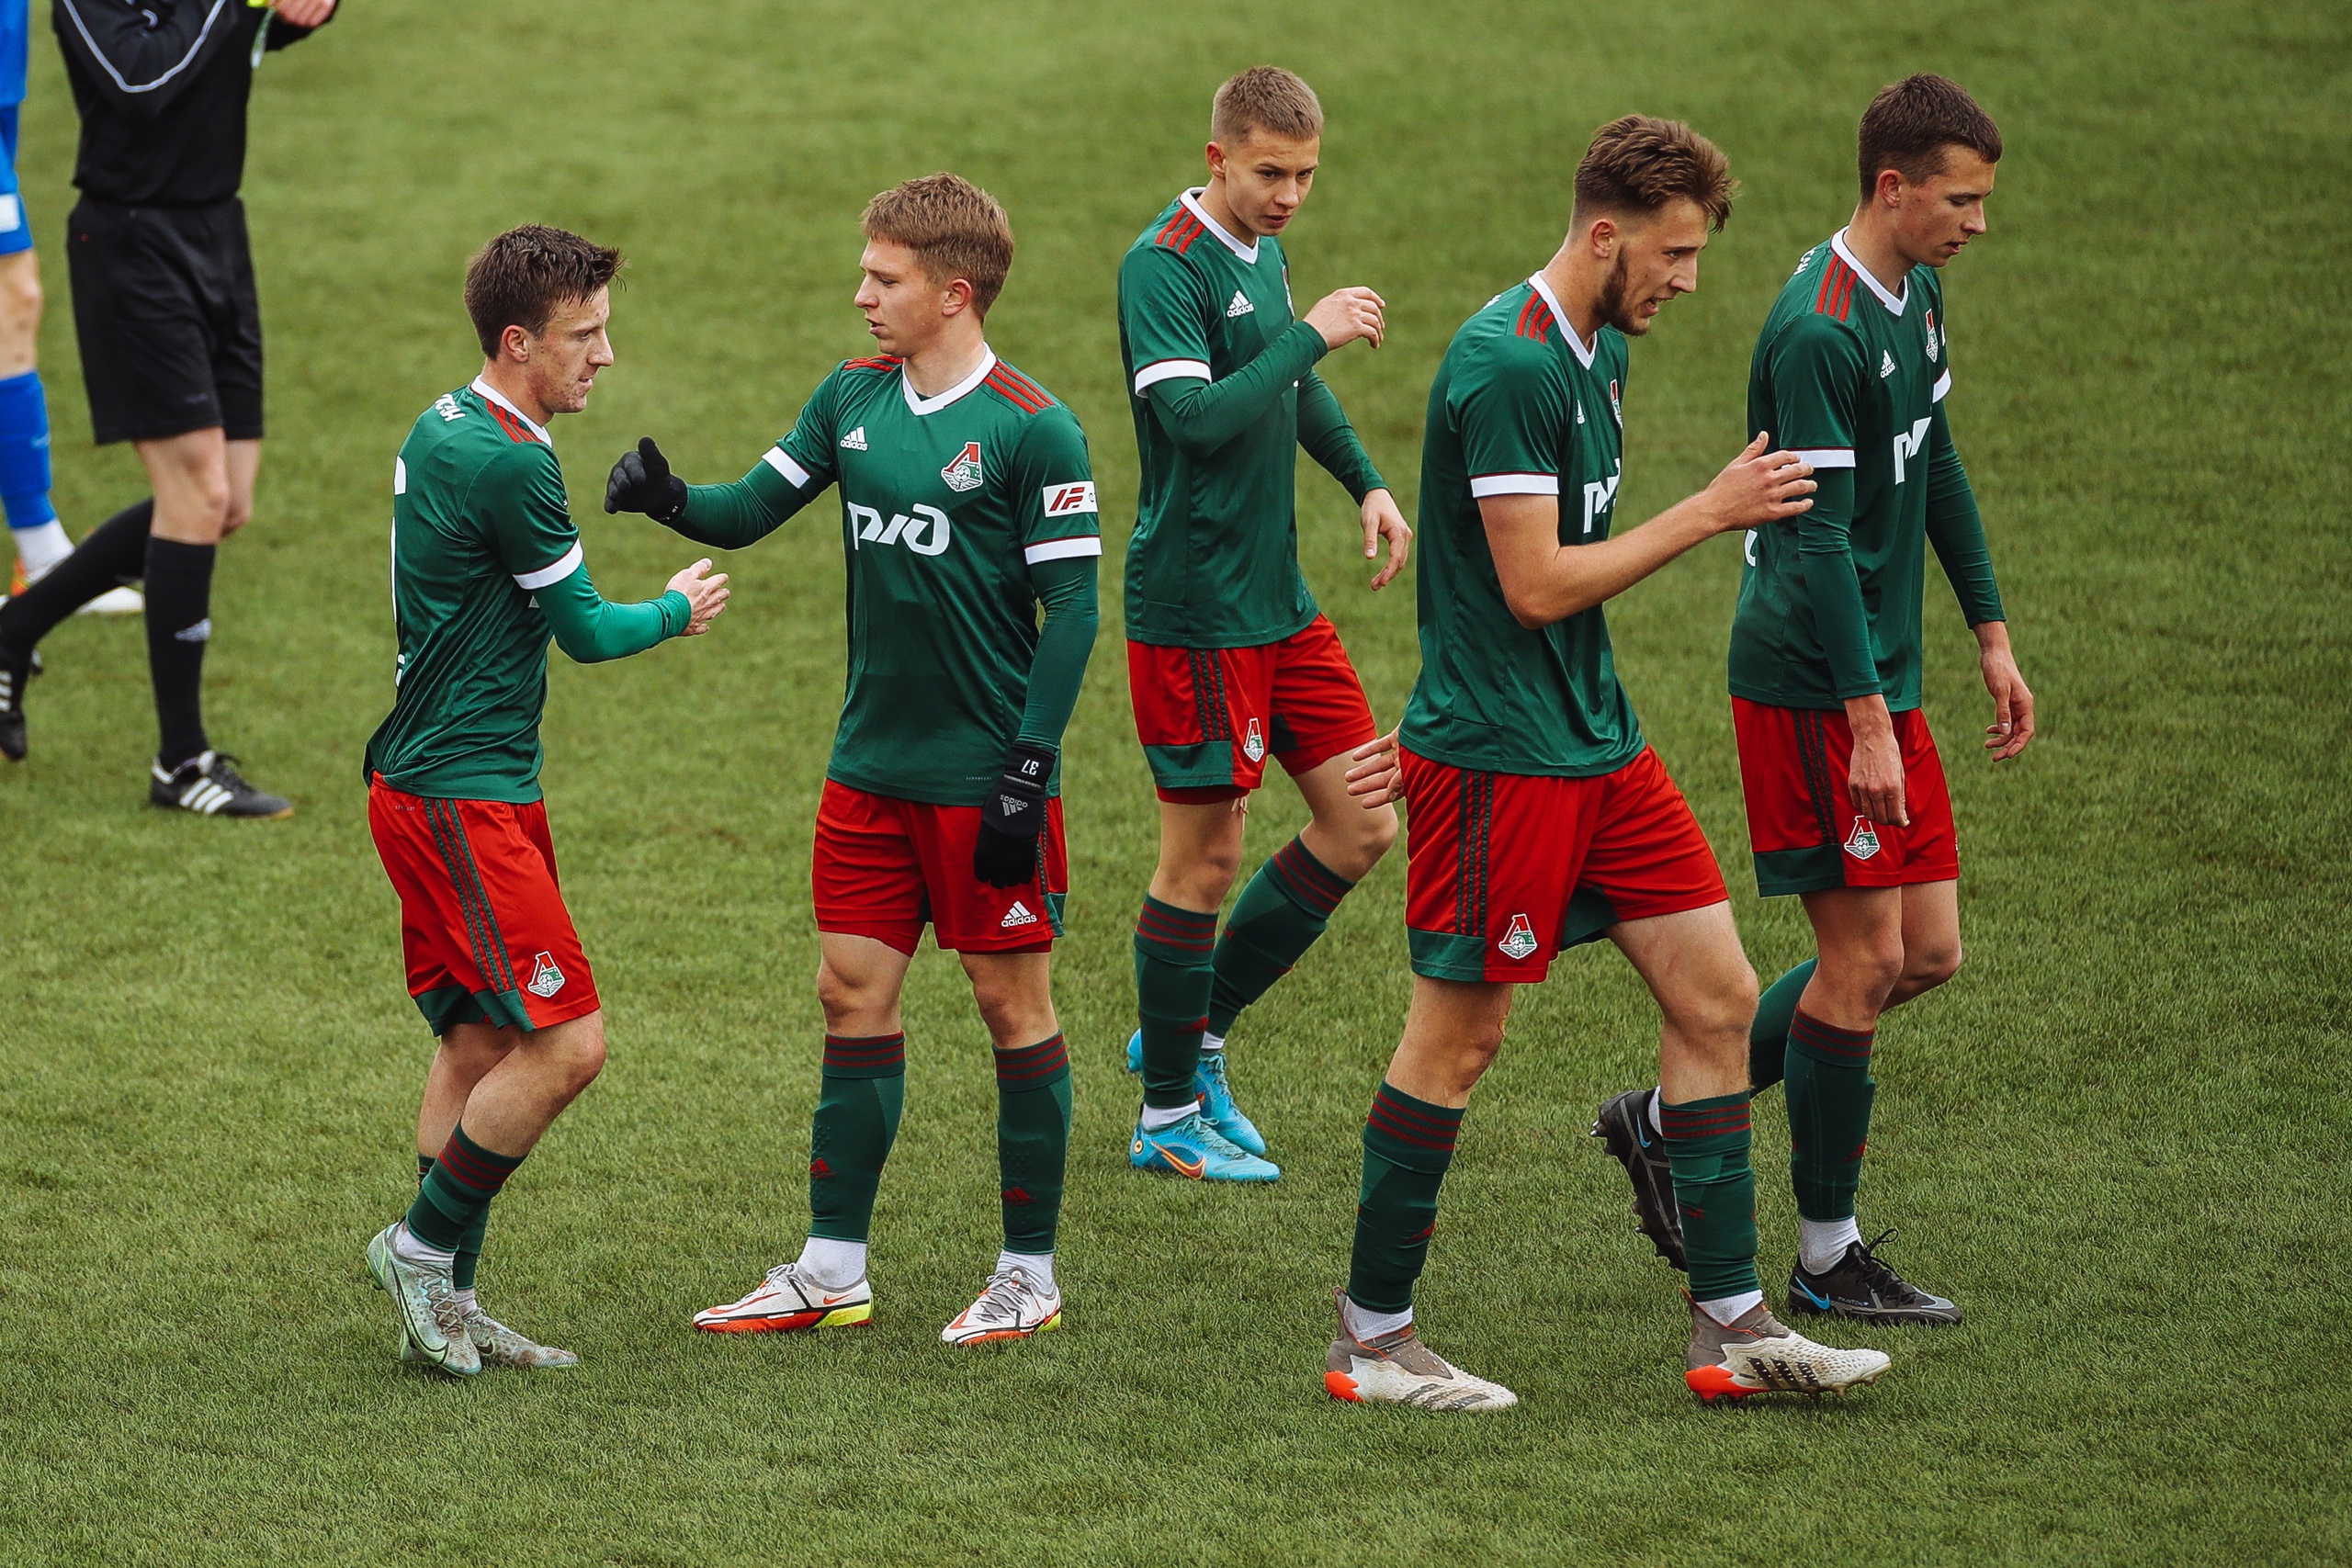 Lokomotiv U-19 — Chertanovo U-19. Friendly match